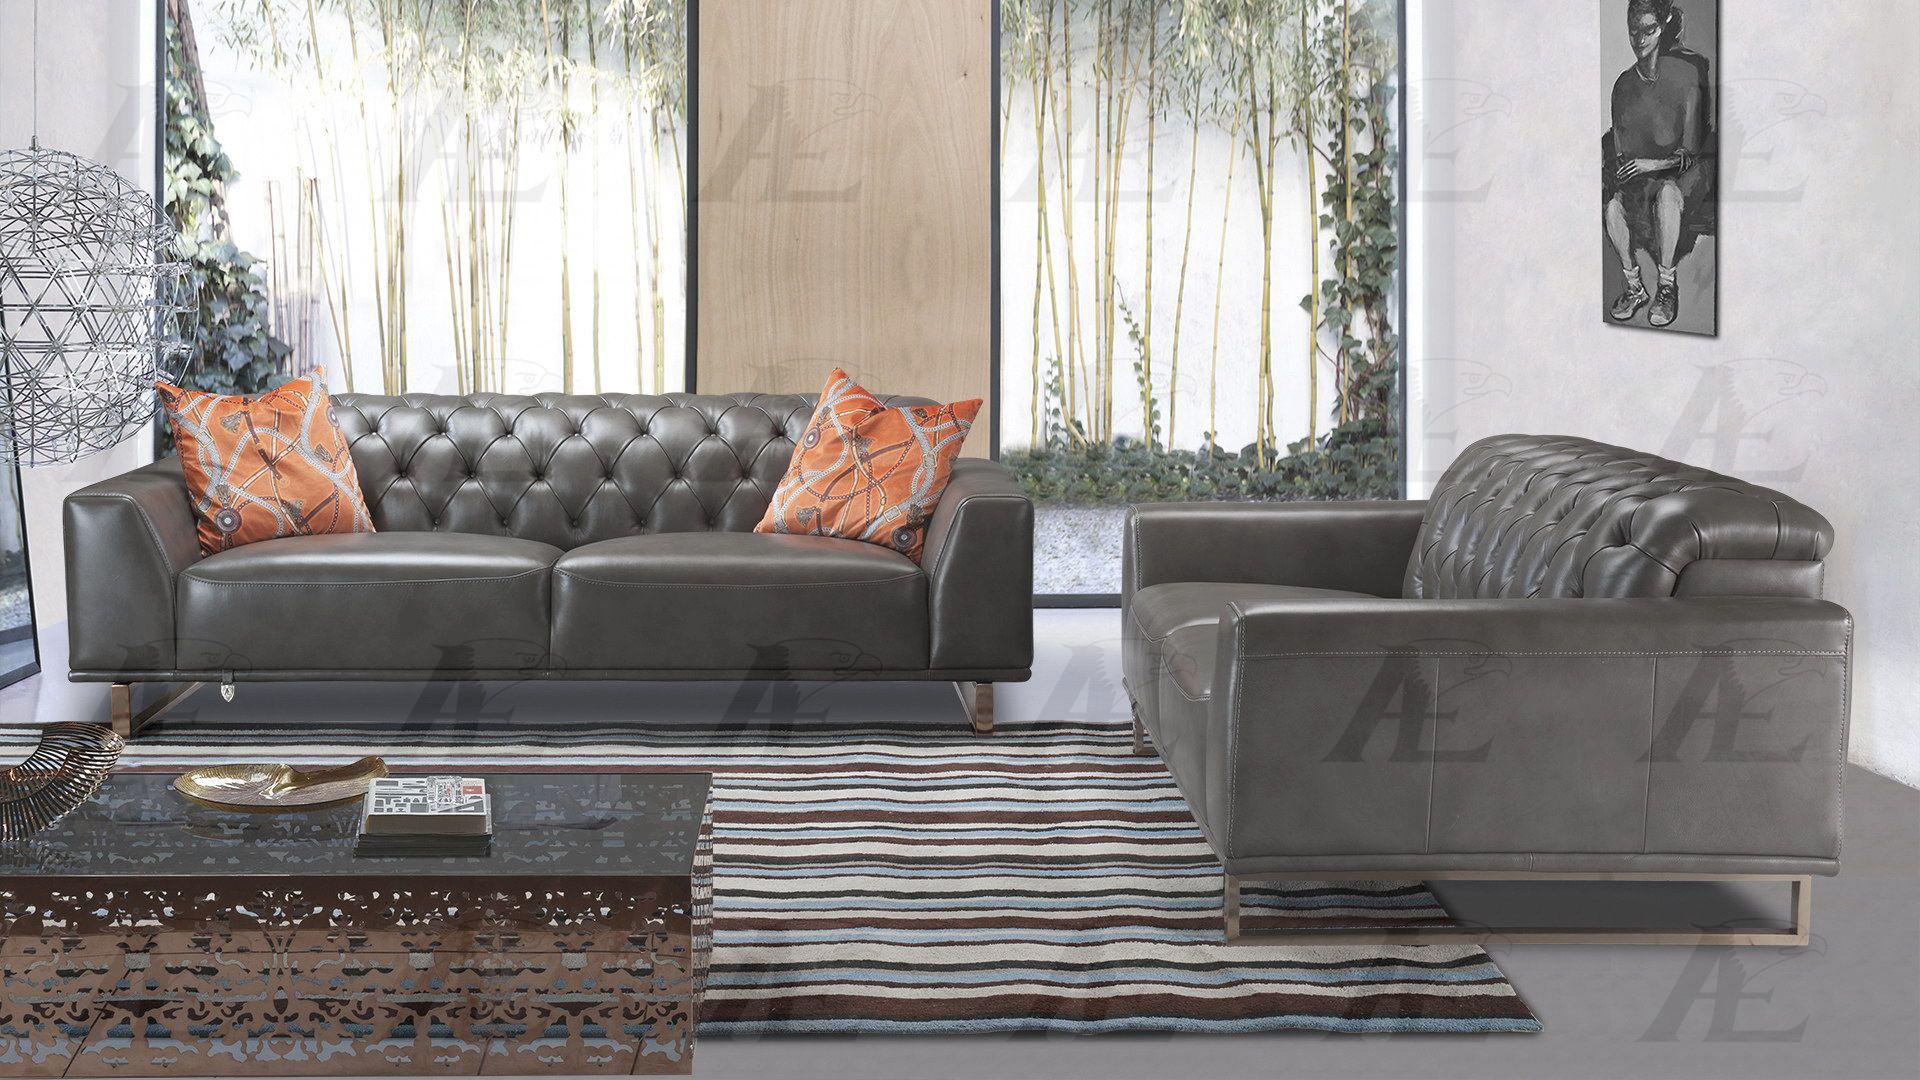 

    
American Eagle EK-693 Gray Italian Leather Living Room Sofa Set 2pcs in Contemporary Style
